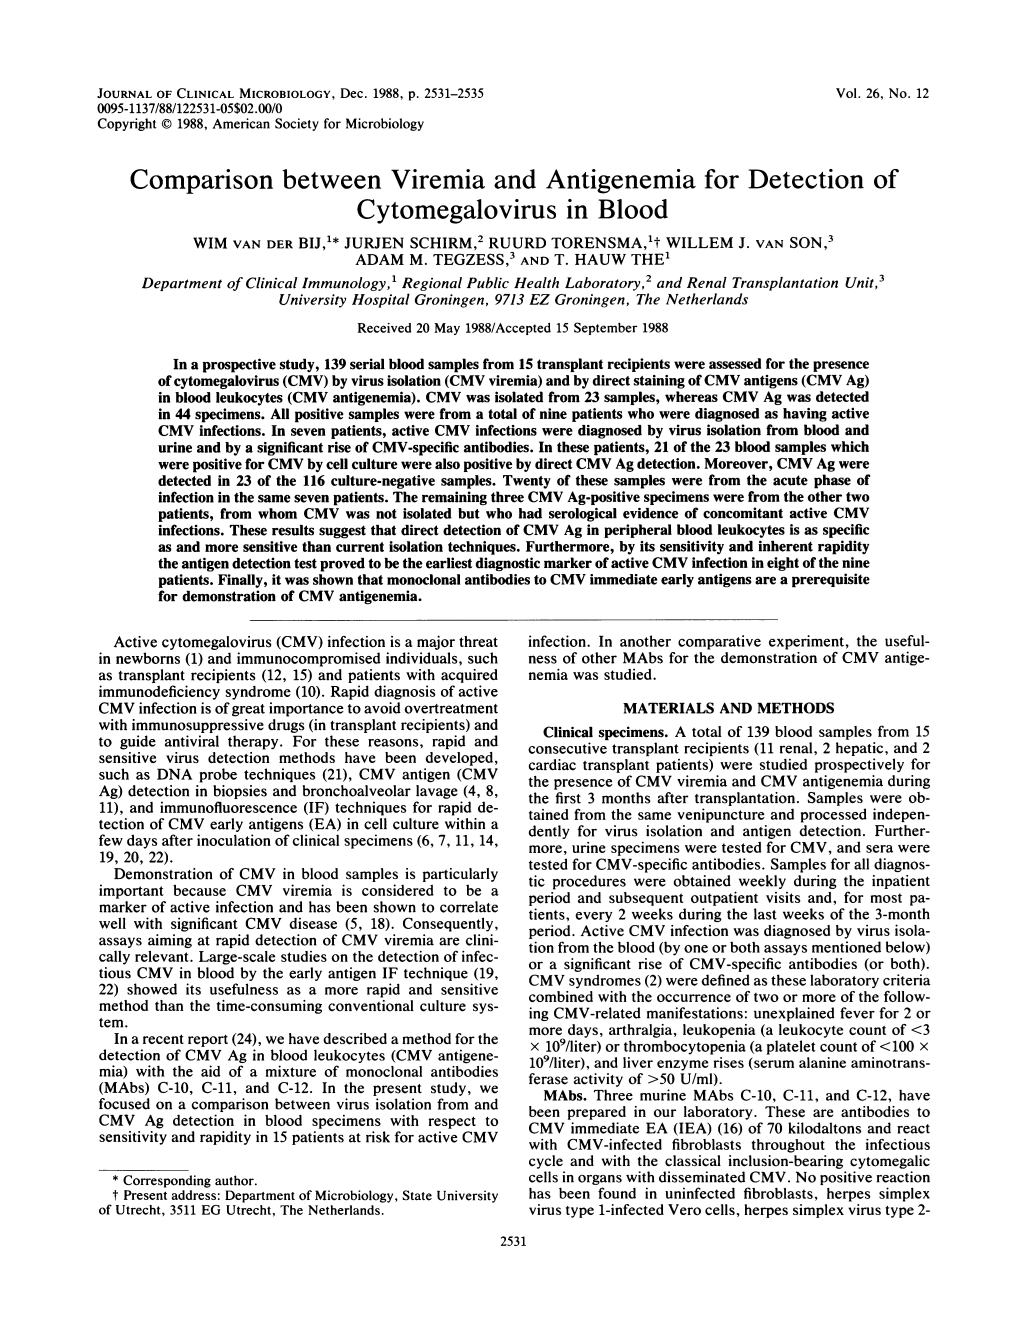 Comparison Between Viremia and Antigenemia for Detection of Cytomegalovirus in Blood WIM VAN DER BIJ,L* JURJEN SCHIRM,2 RUURD TORENSMA,Lt WILLEM J